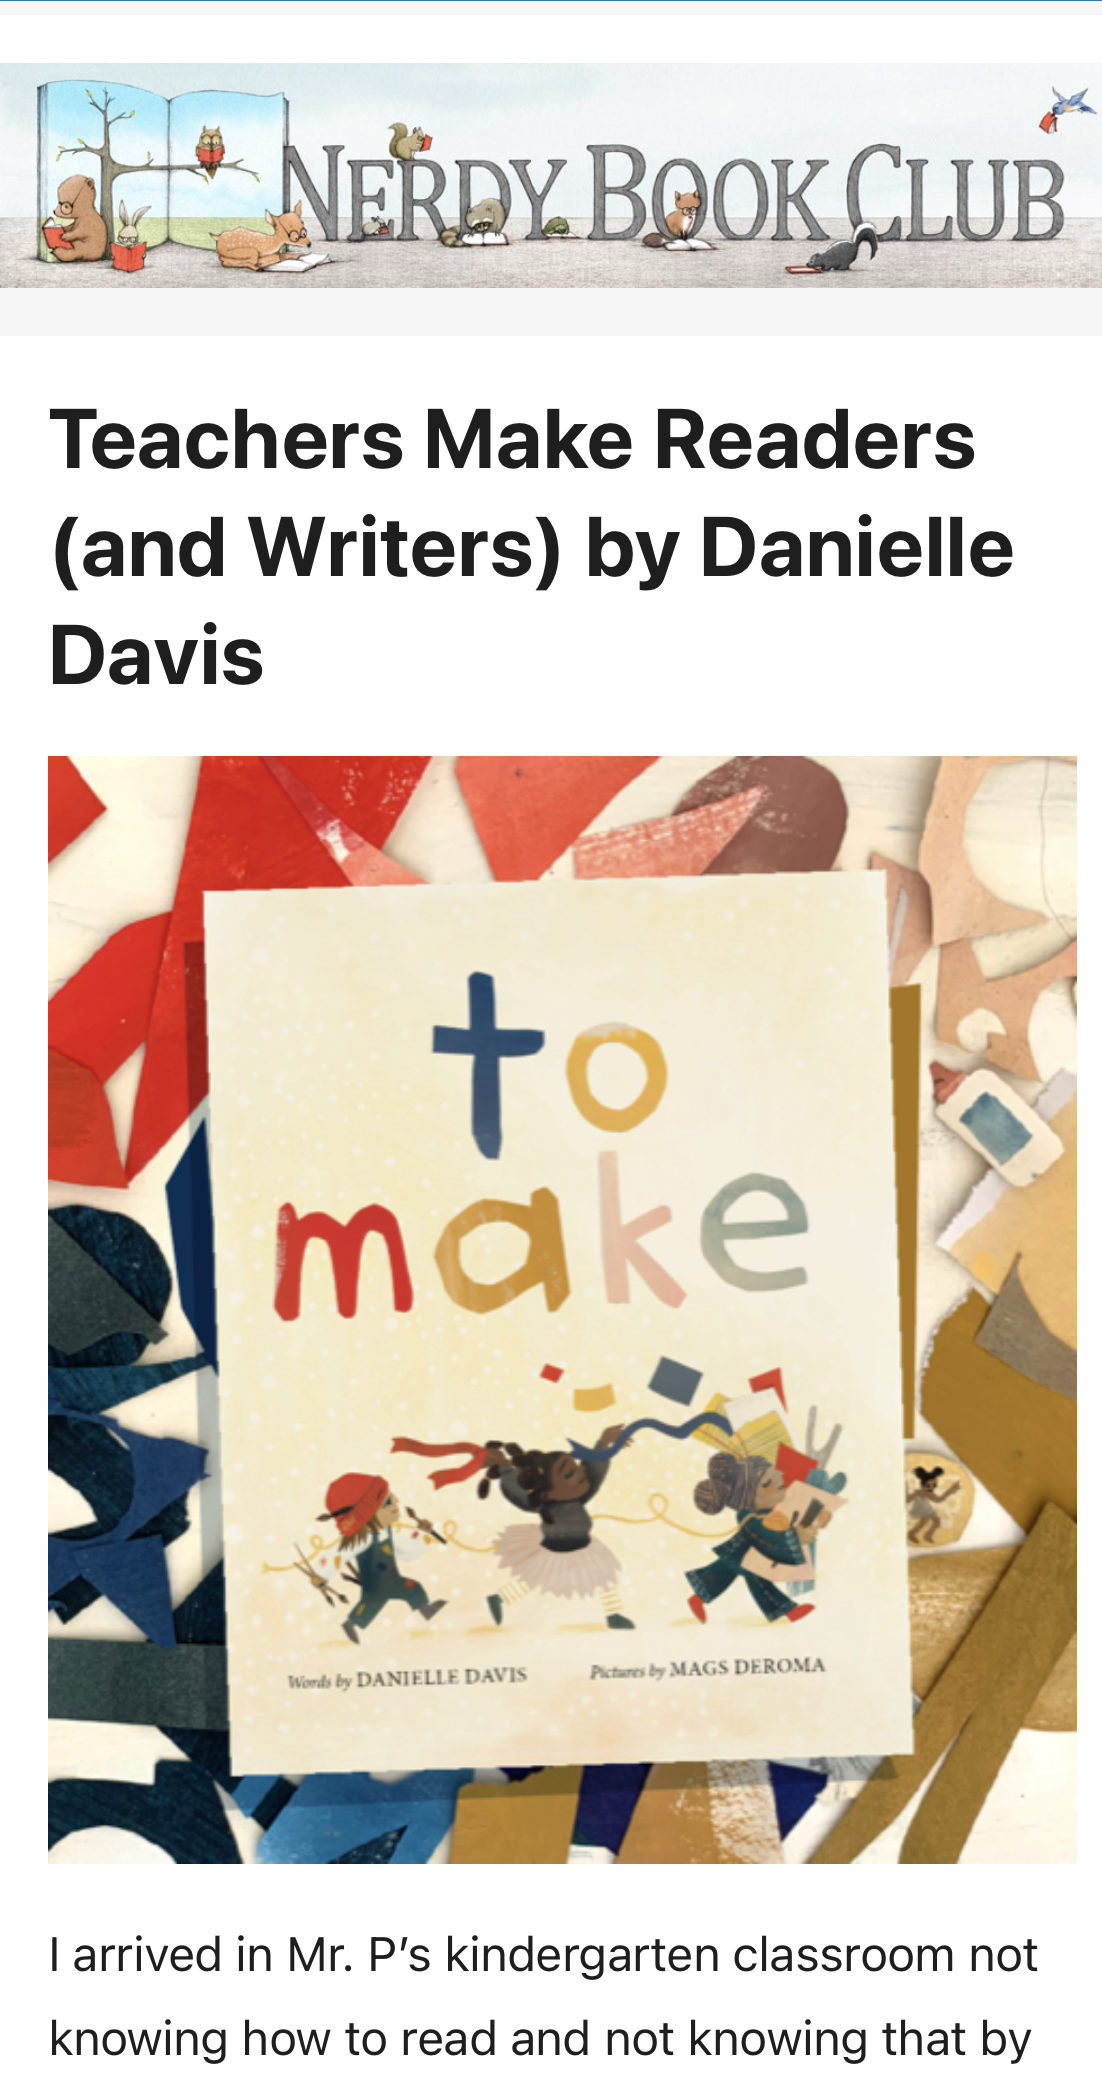 Danielle Davis nerdy book club to make